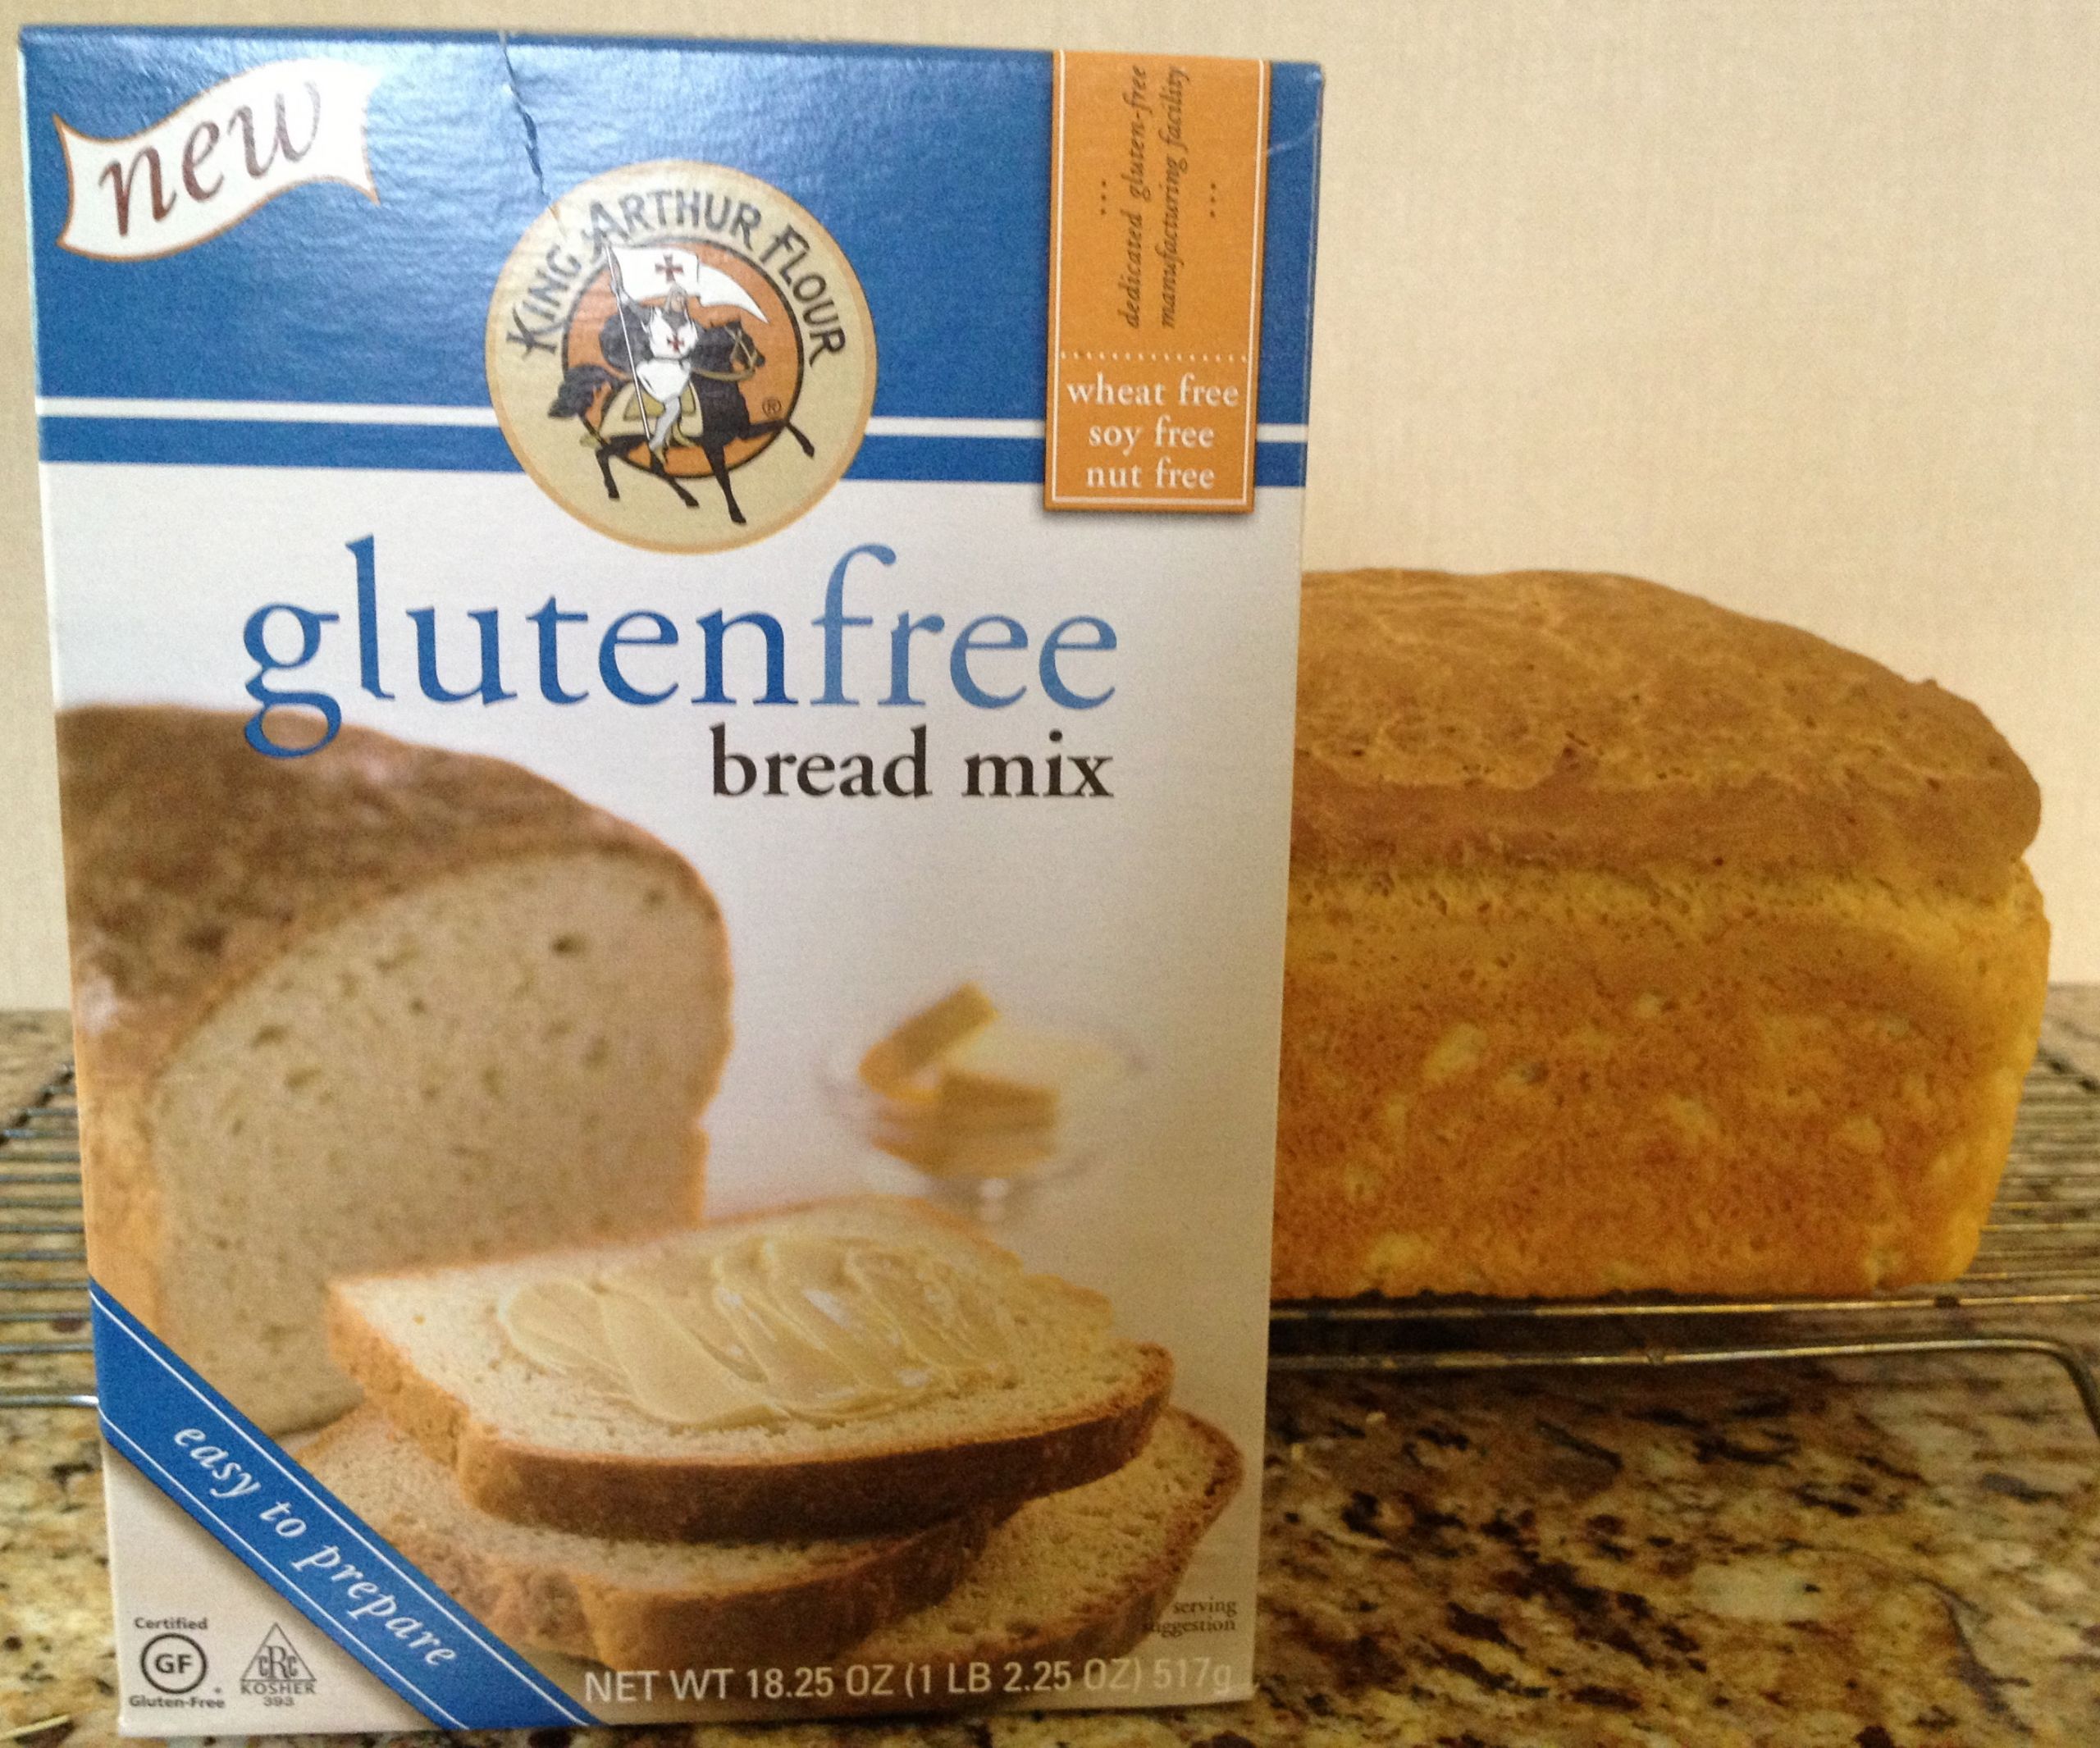 King Arthur Gluten Free Bread
 King Arthur Gluten Free Bread Mix